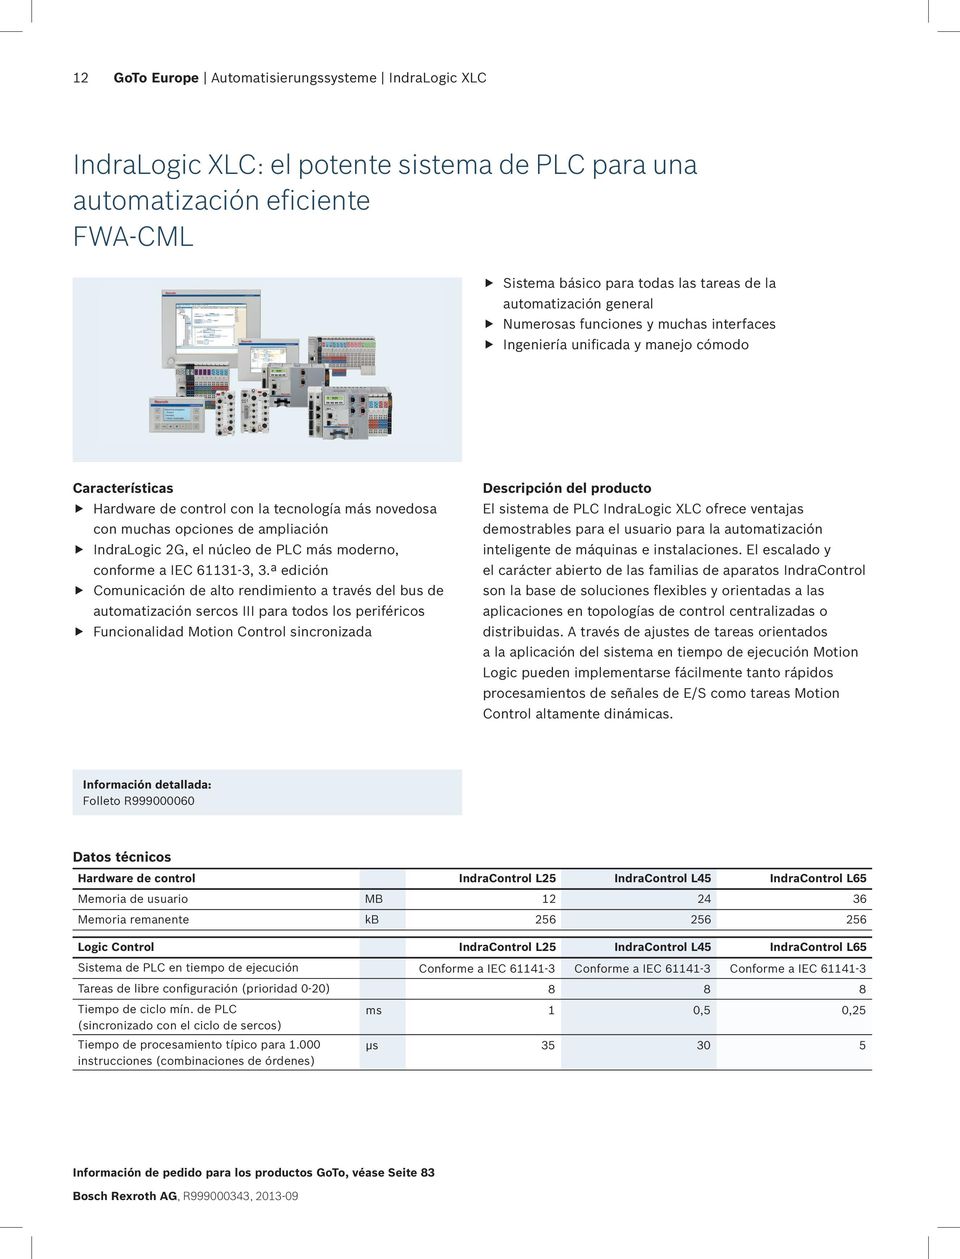 núcleo de PLC más moderno, conforme a IEC 61131-3, 3.